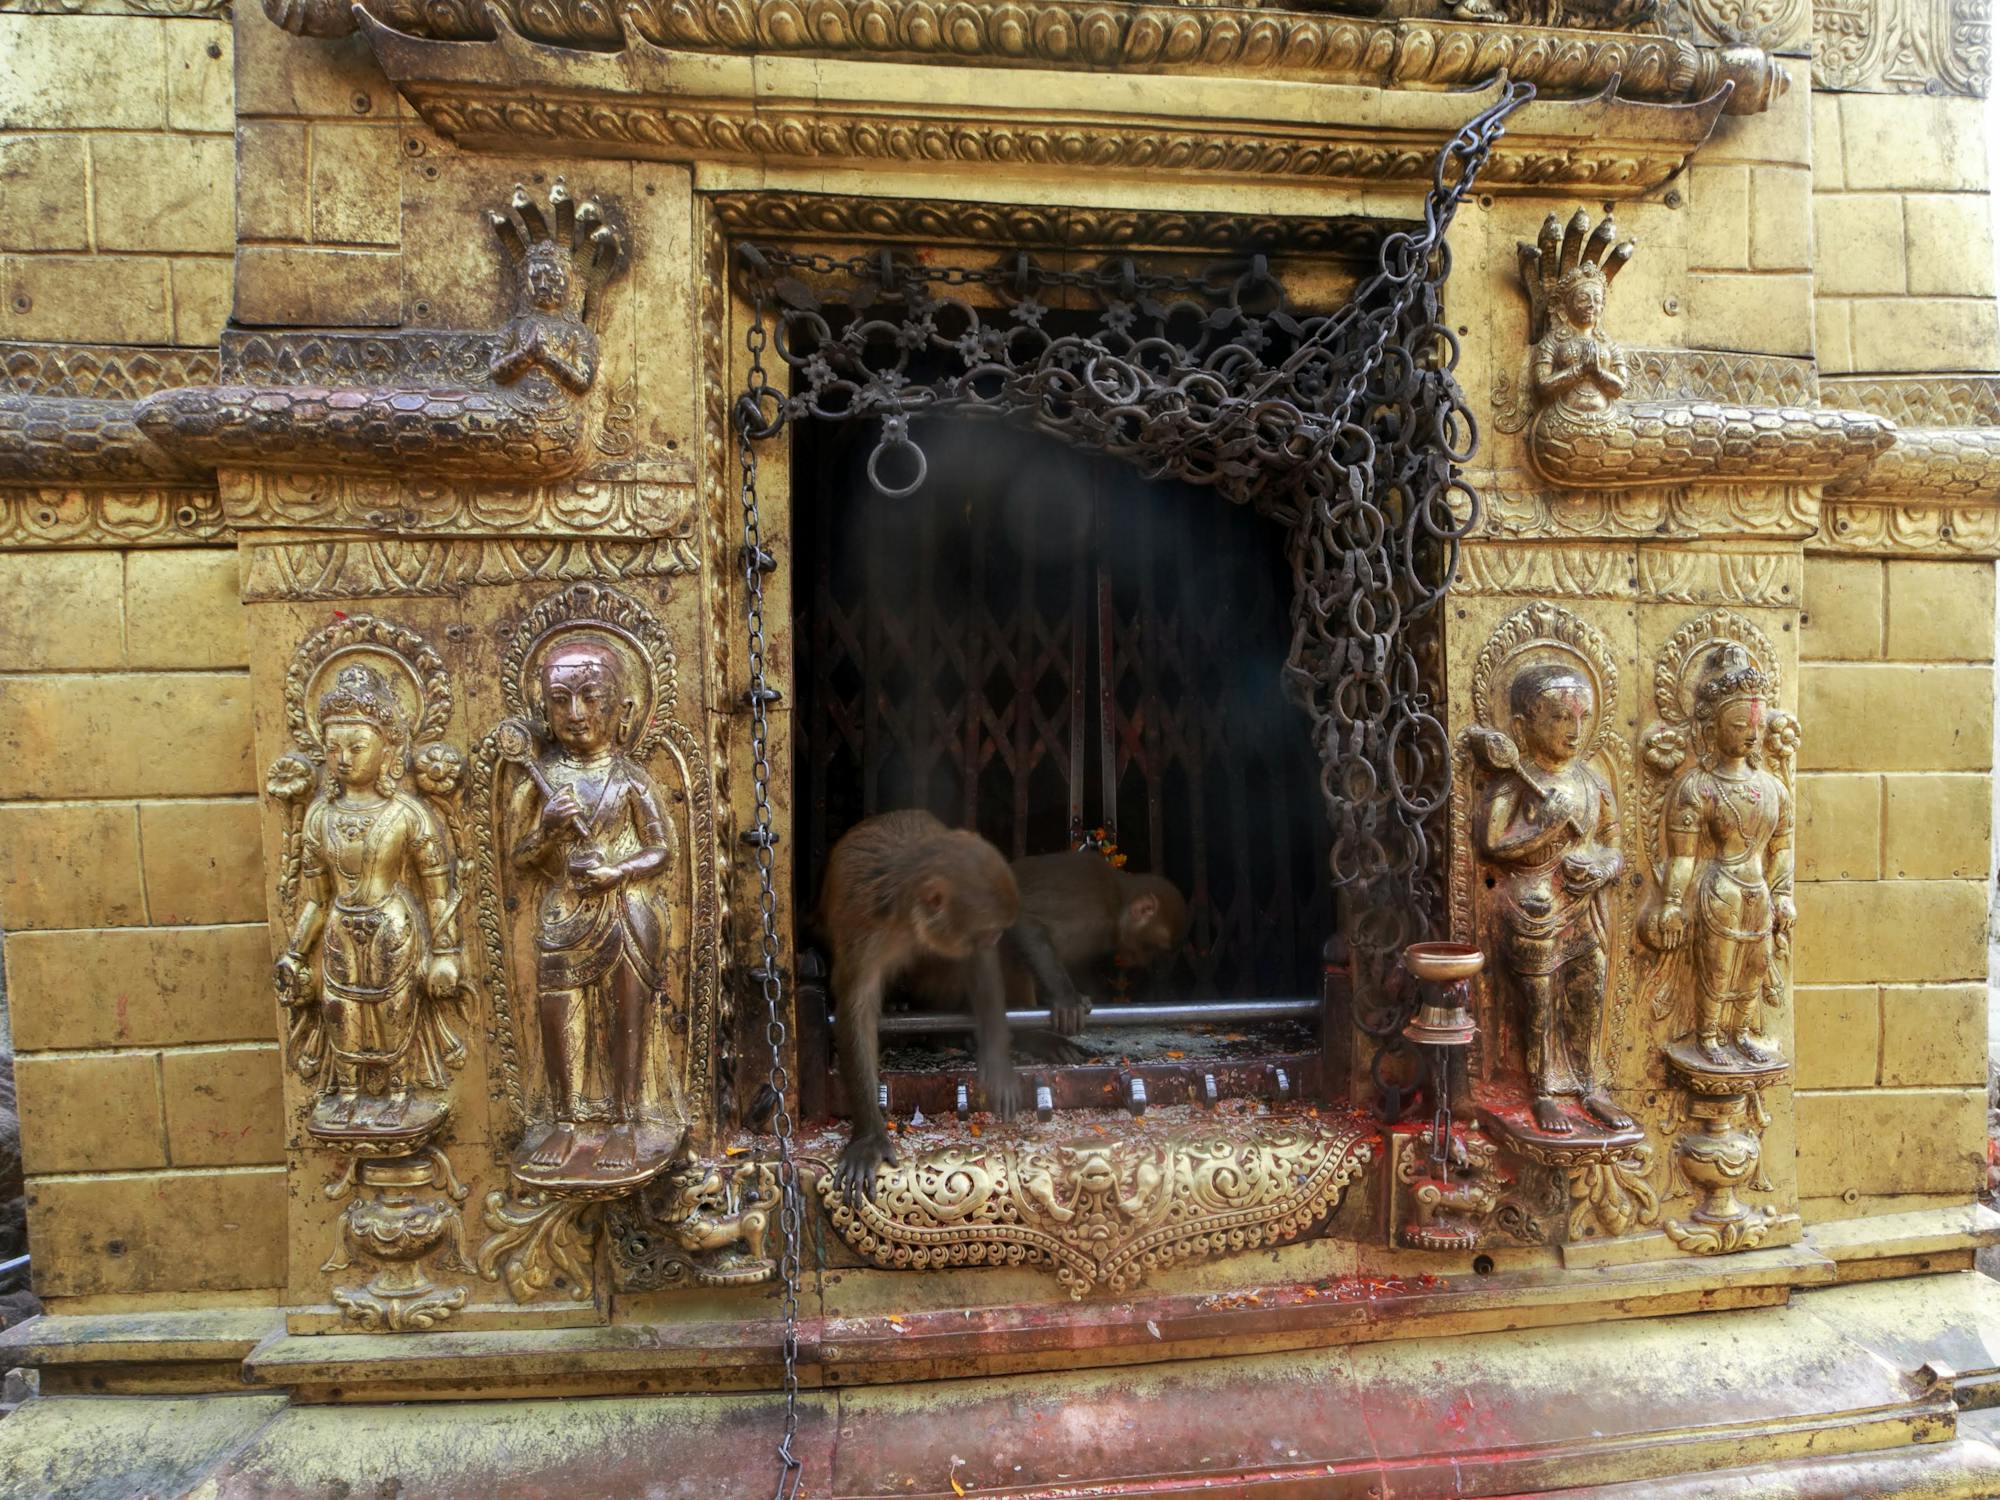 Indian Temple Photo by Mehmet Turgut  Kirkgoz  from Pexels: https://www.pexels.com/photo/monkeys-in-cavern-of-ancient-temple-facade-11793797/